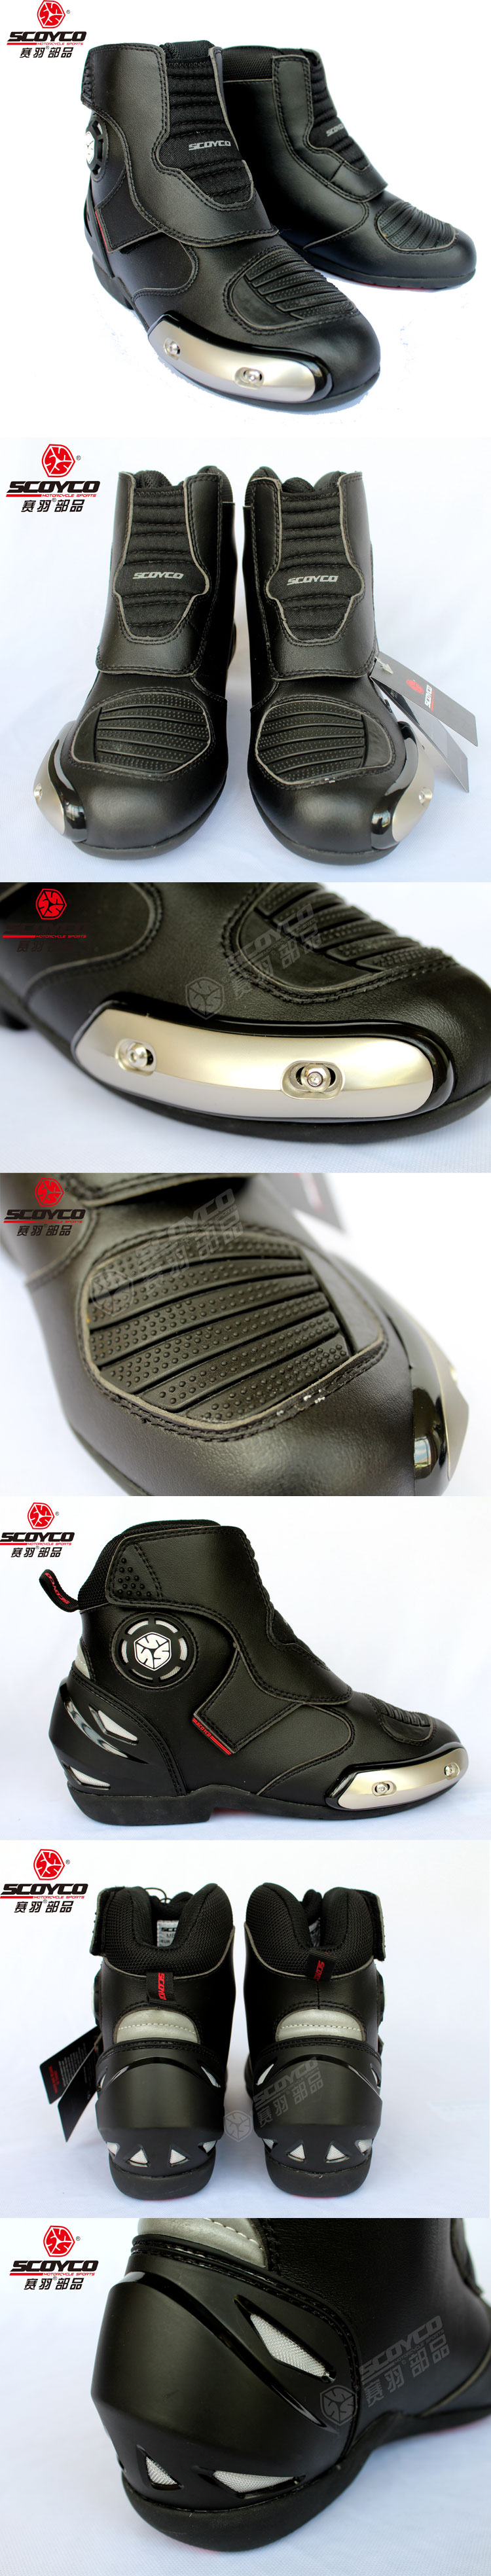 Chaussures moto - Ref 1396677 Image 14